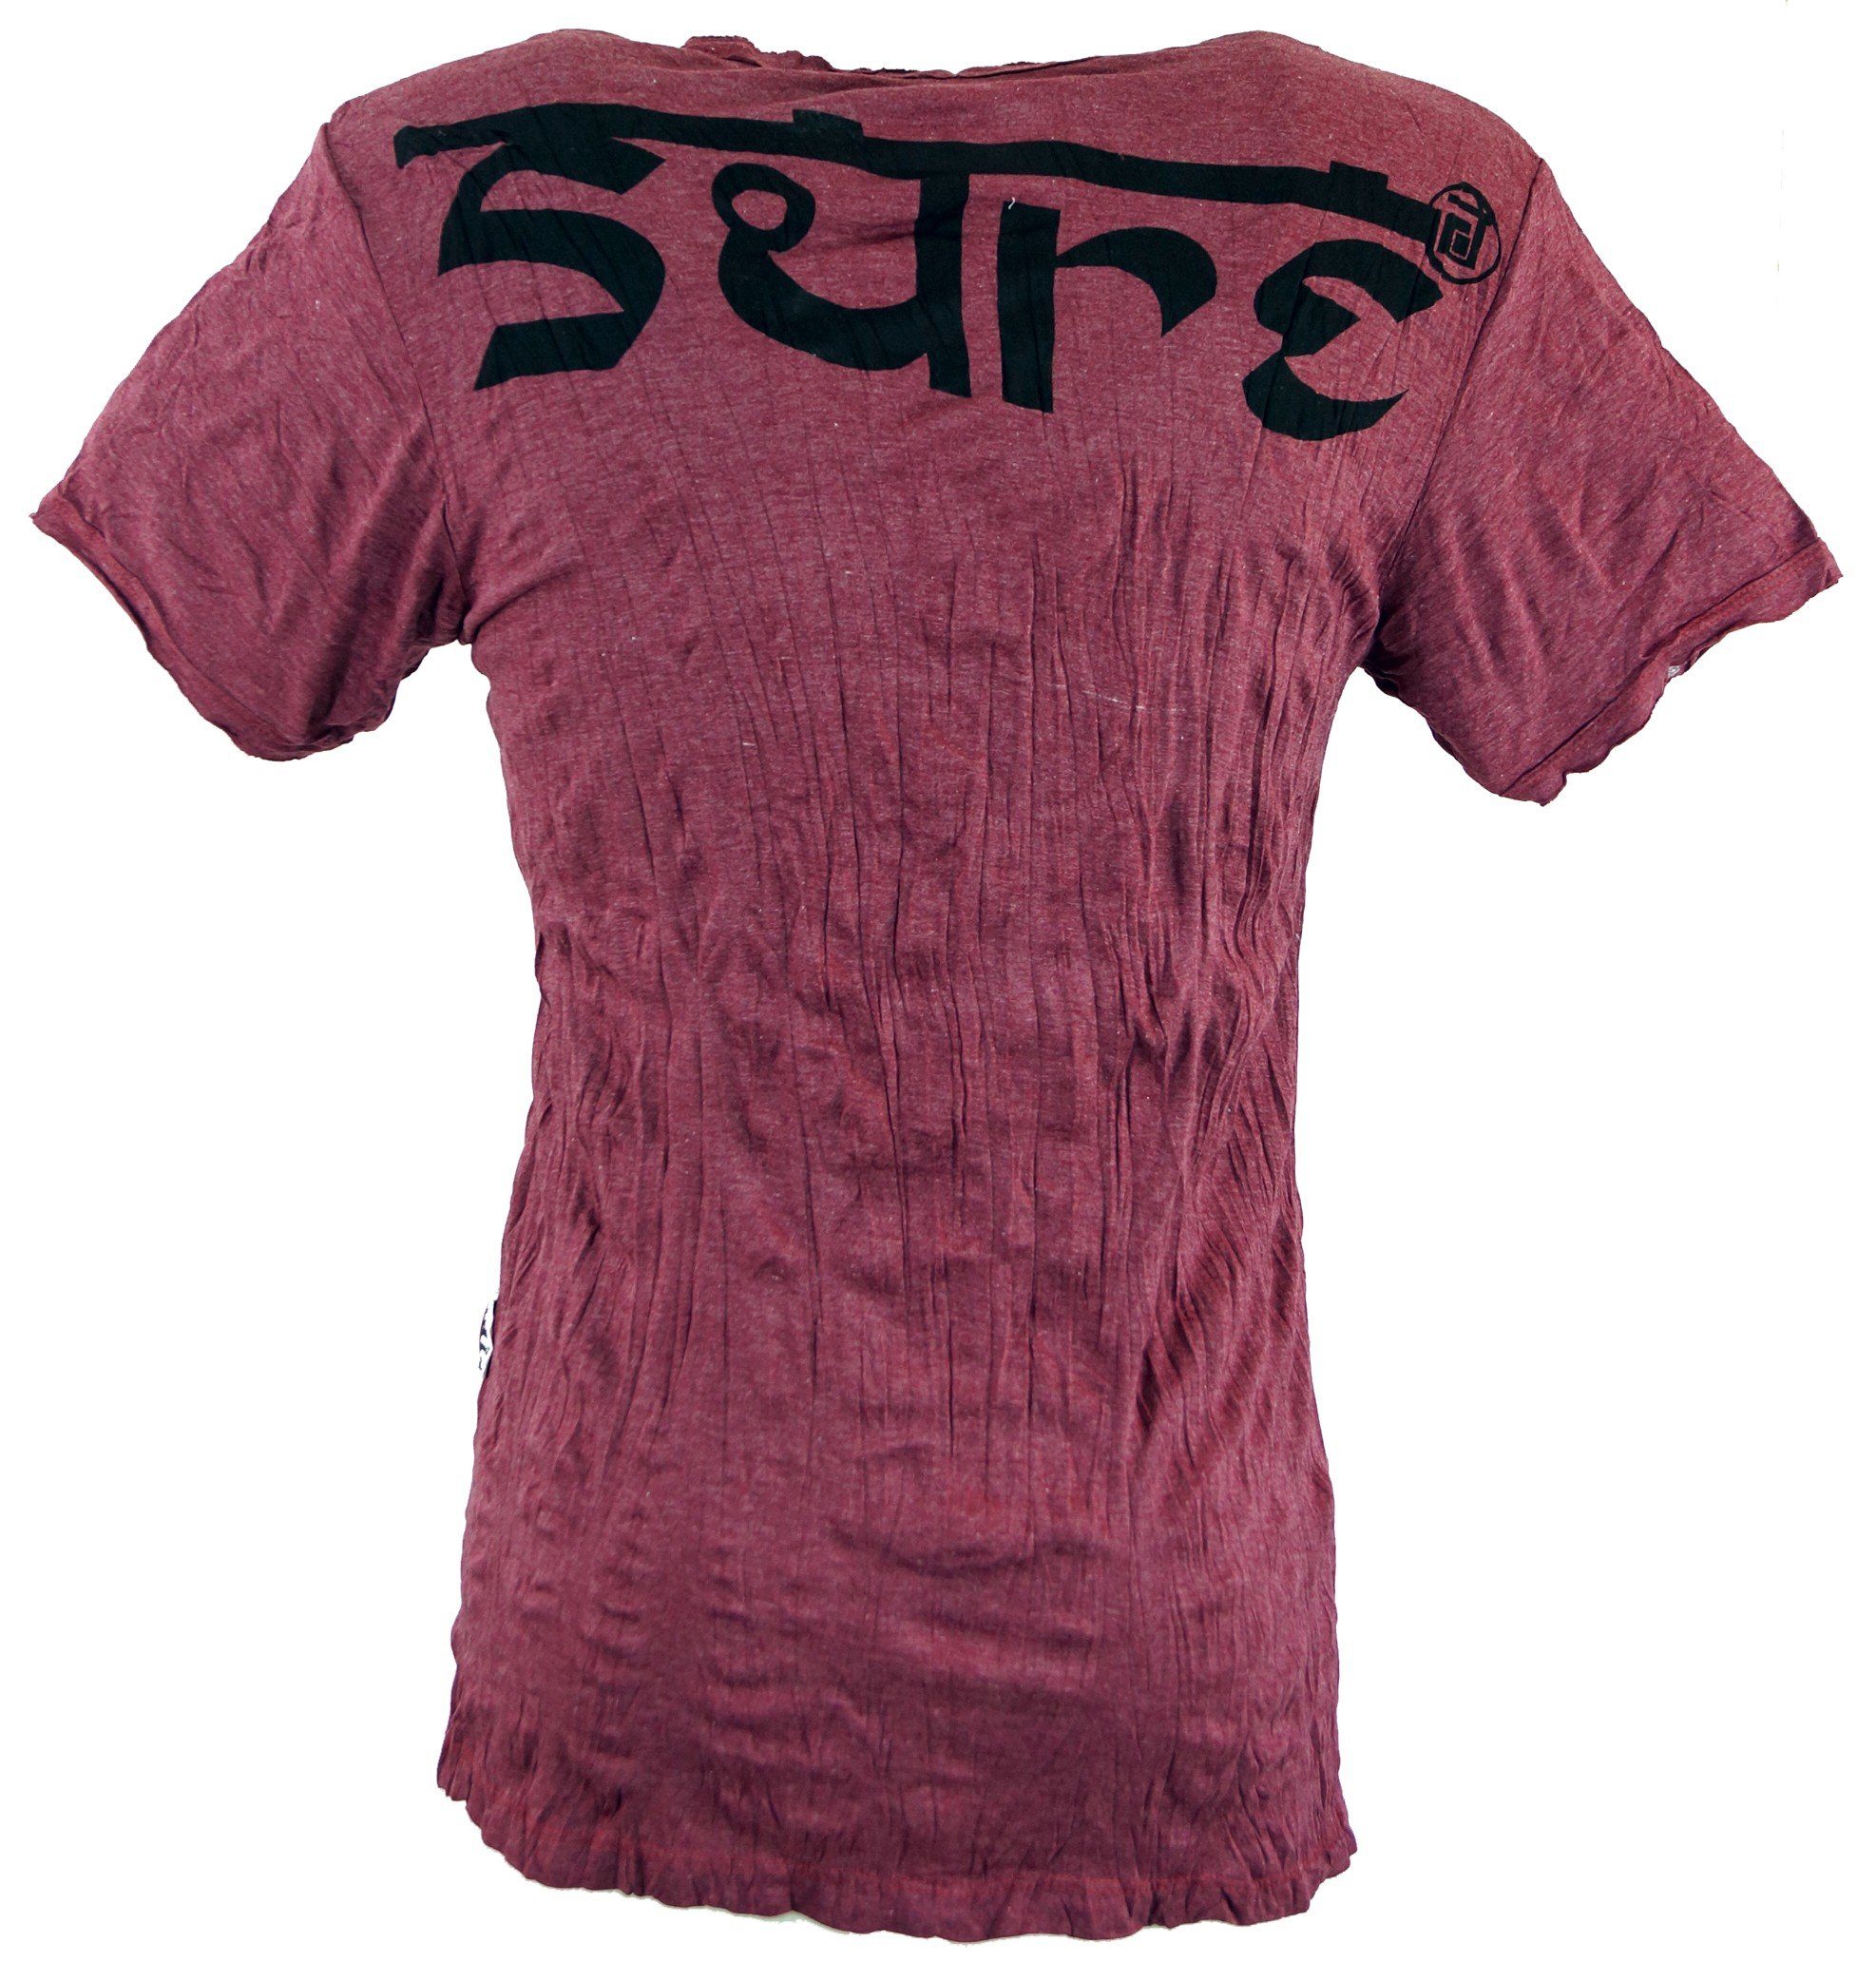 Style, T-Shirt Goa T-Shirt - Festival, Buddha Bekleidung bordeaux alternative Sure Guru-Shop